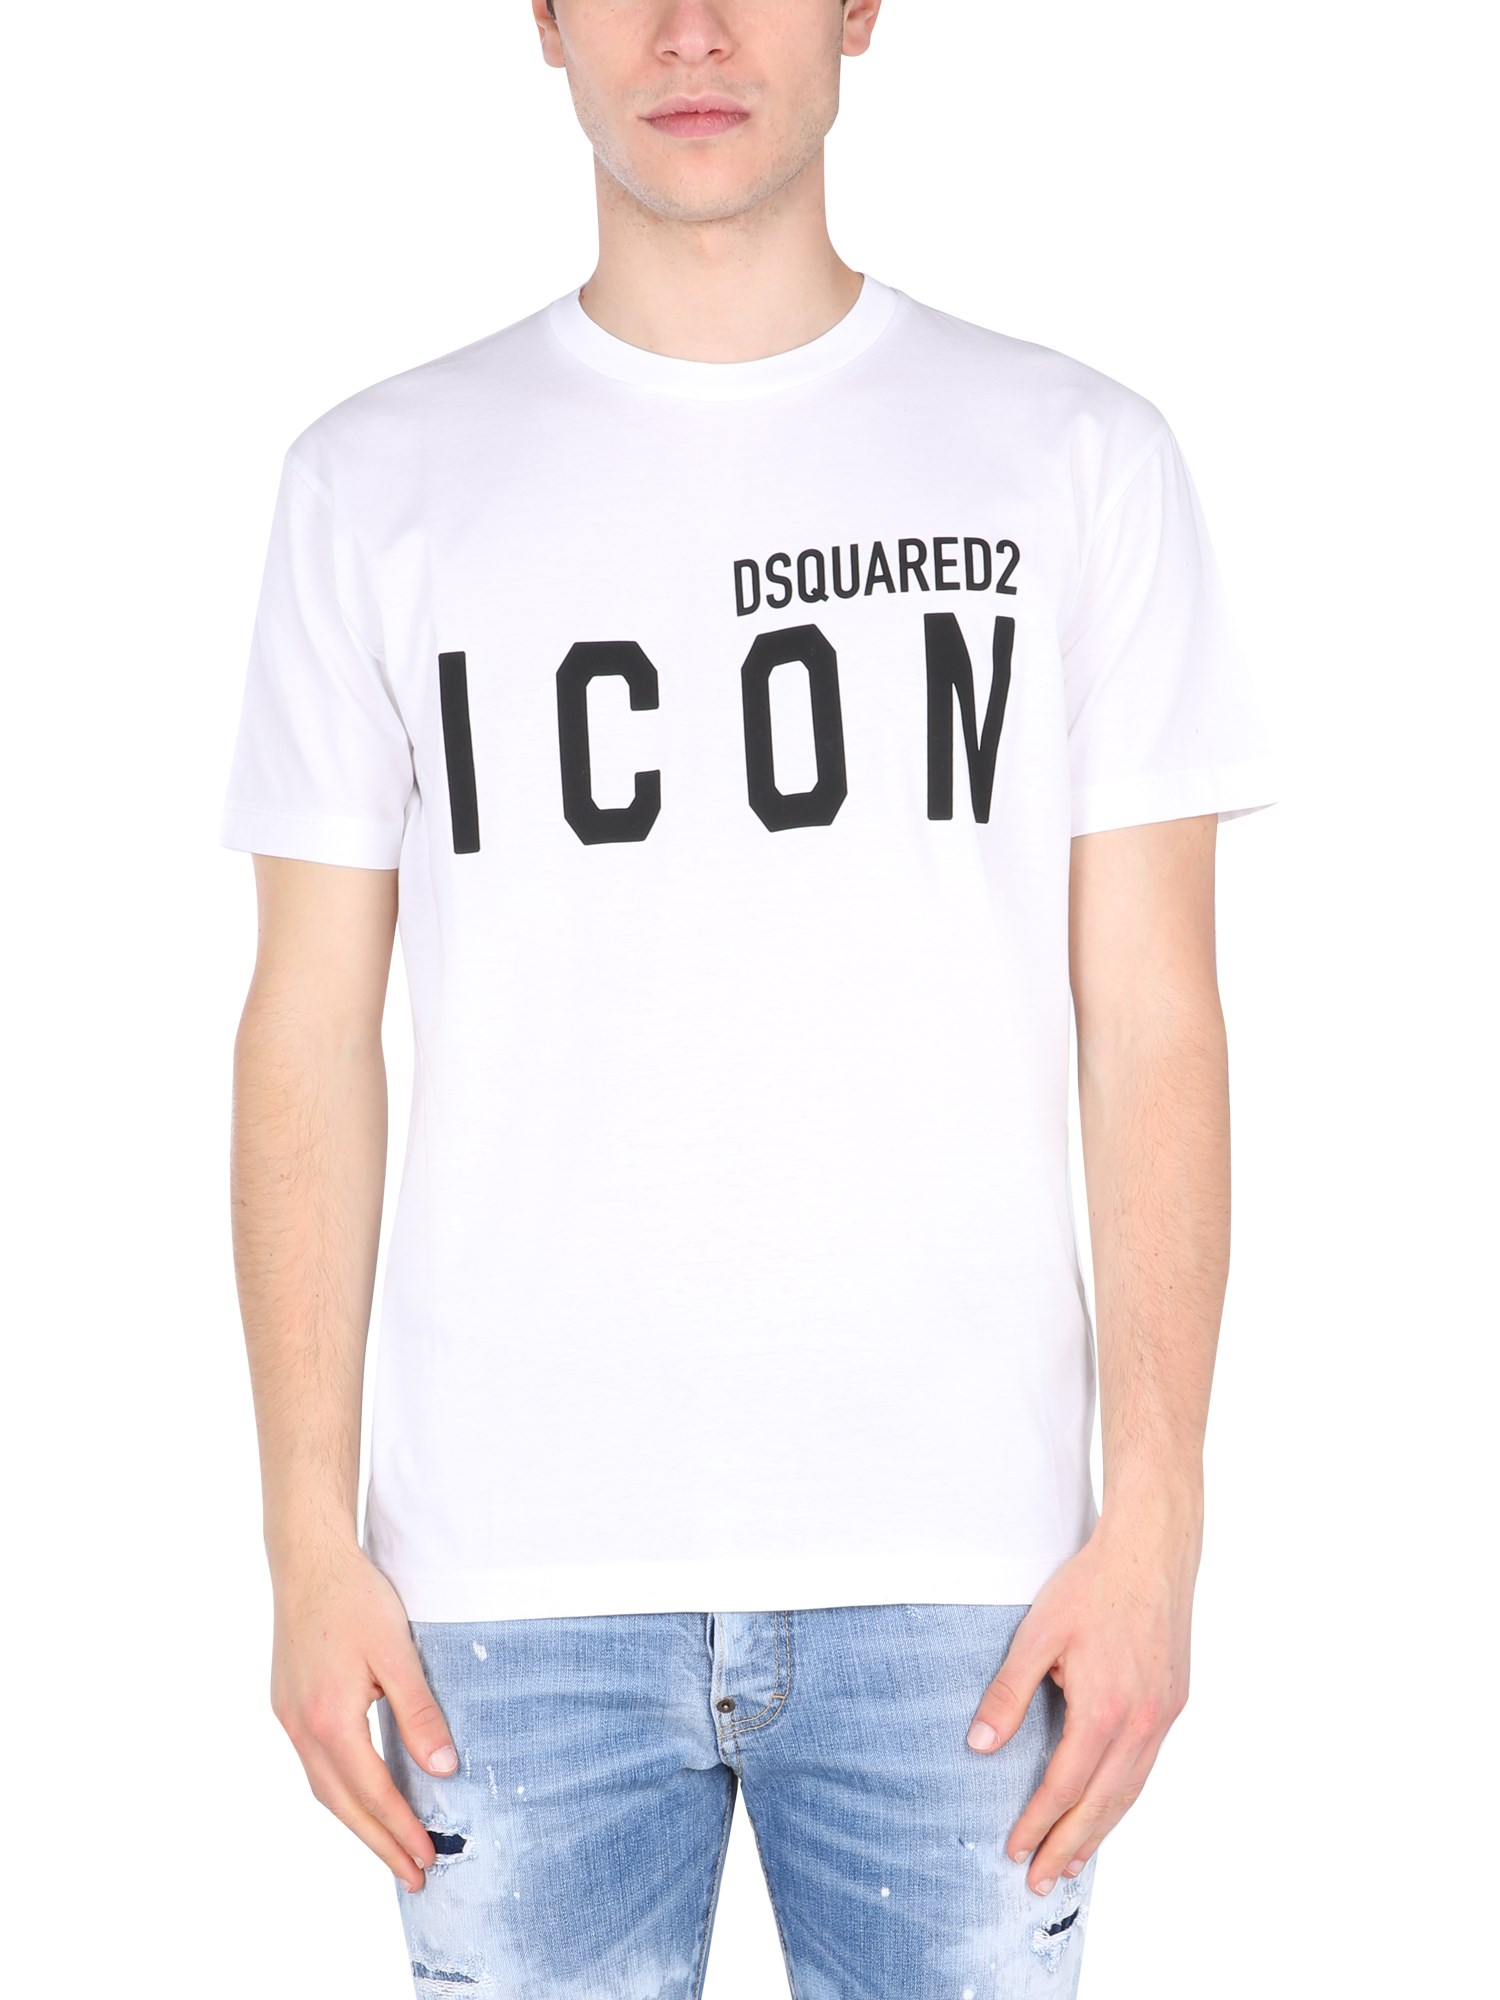 dsquared "icon" crew neck t-shirt